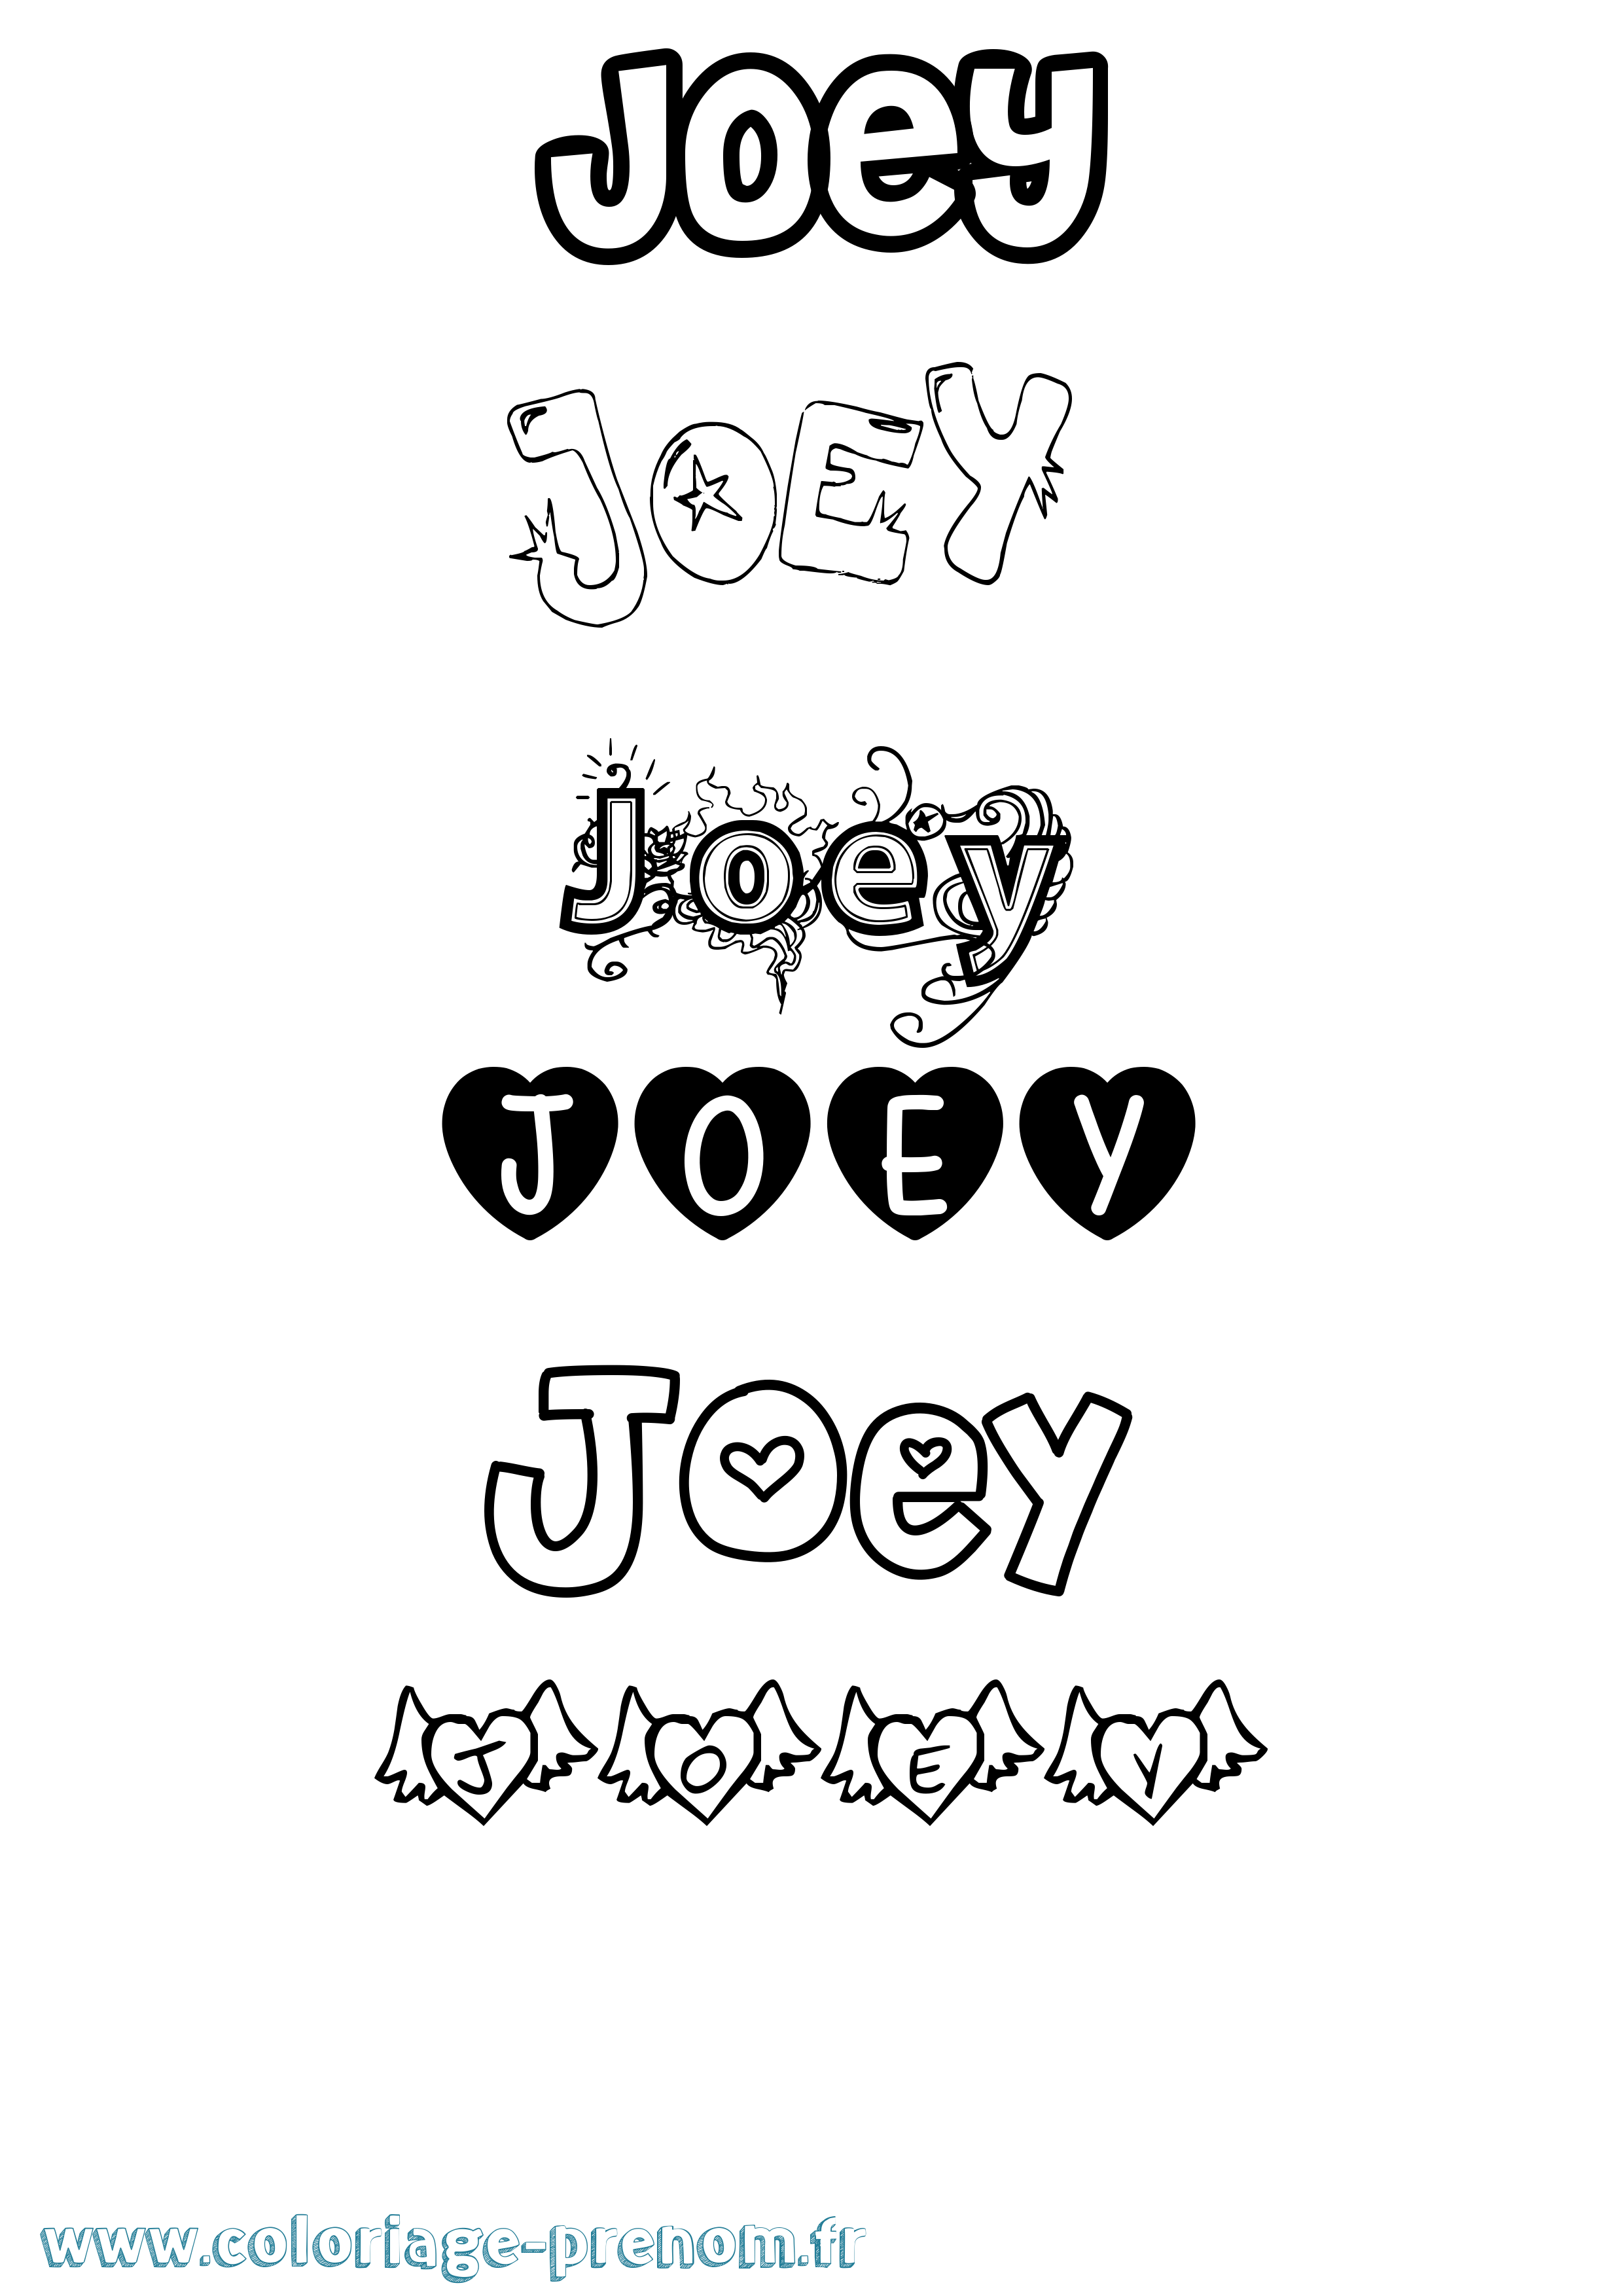 Coloriage prénom Joey